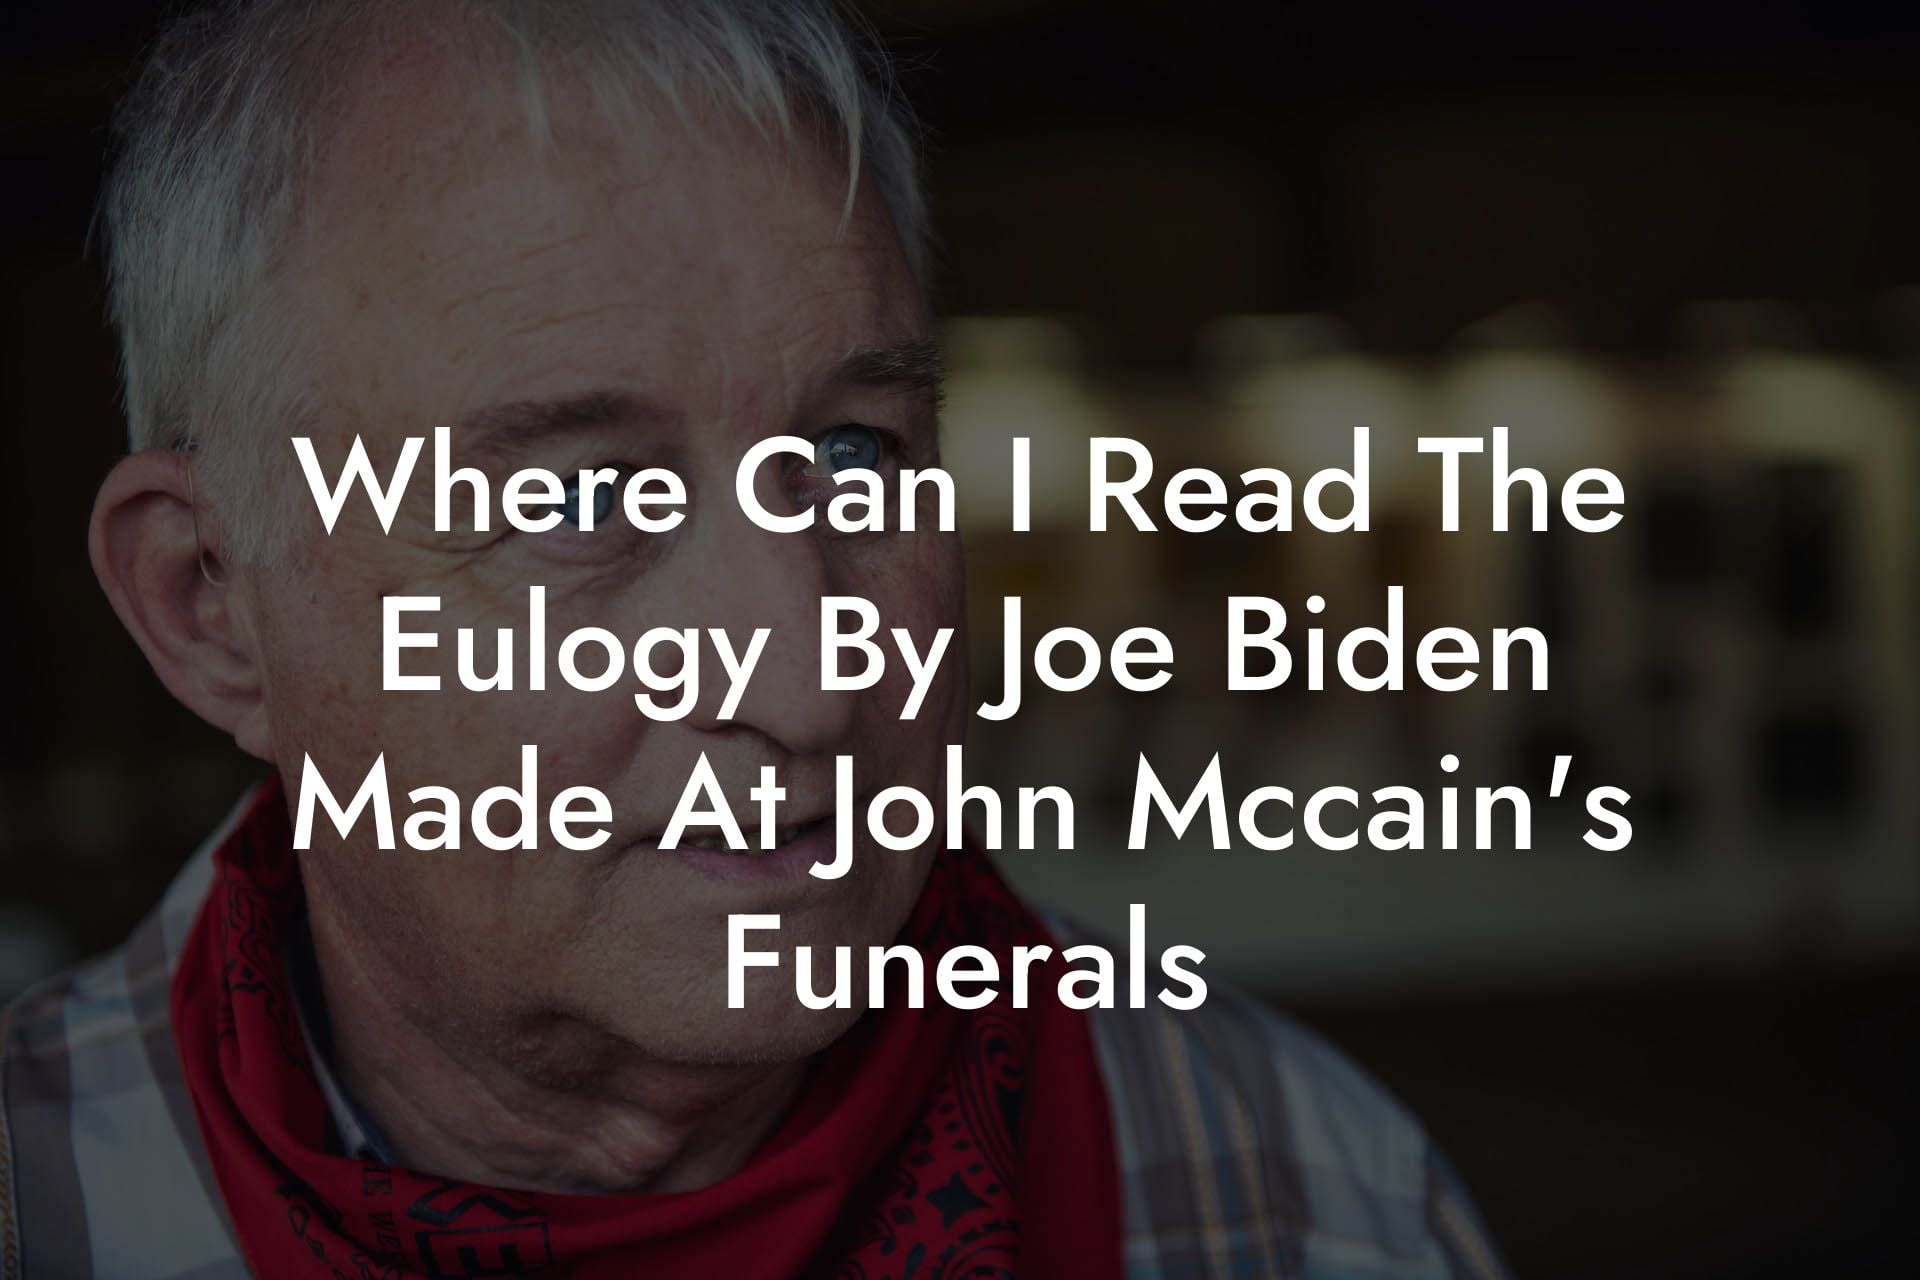 Where Can I Read The Eulogy By Joe Biden Made At John Mccain's Funerals